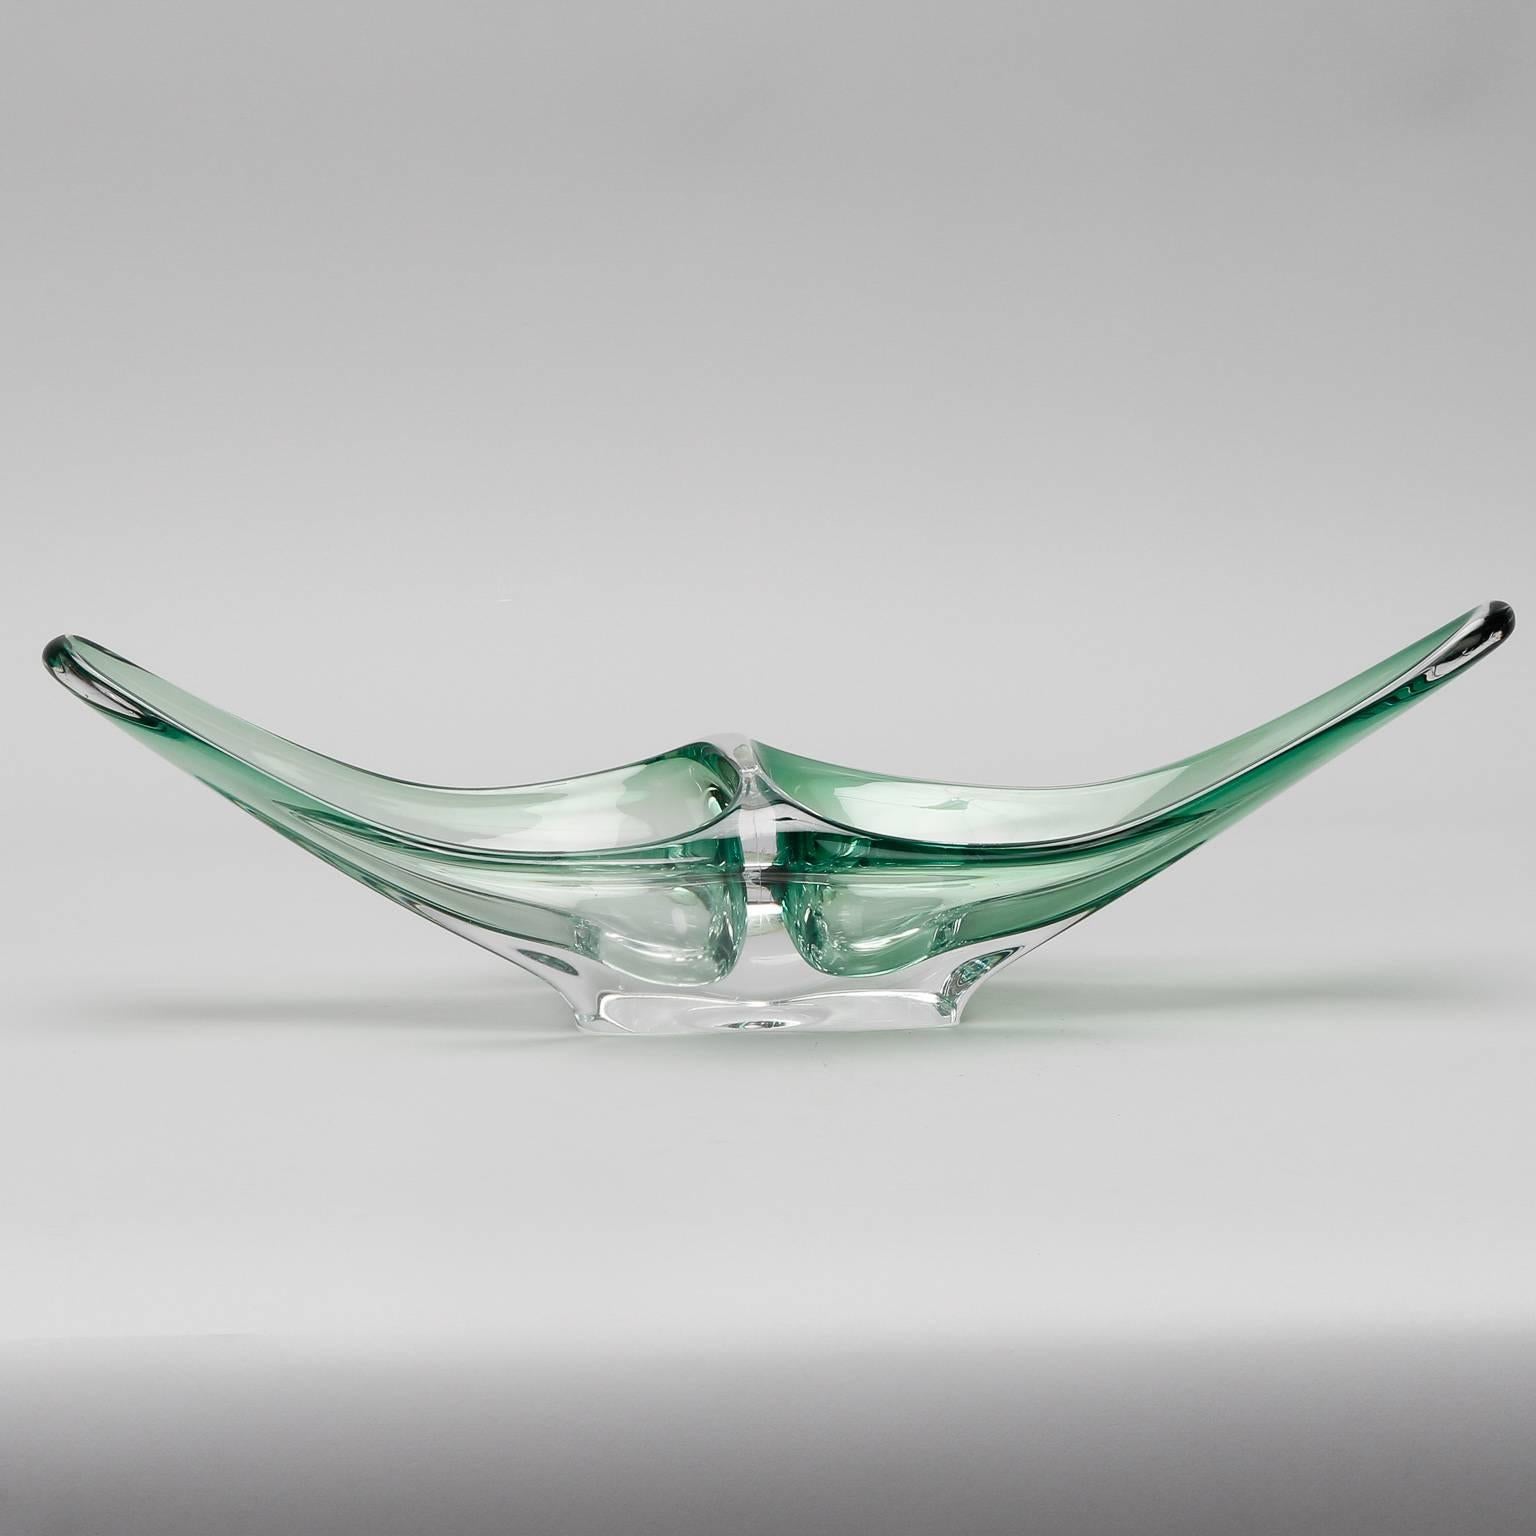 Elongated centerpiece bowl by Belgian maker Val Saint Lambert in green and clear glass. Original label still affixed, circa 1960s.